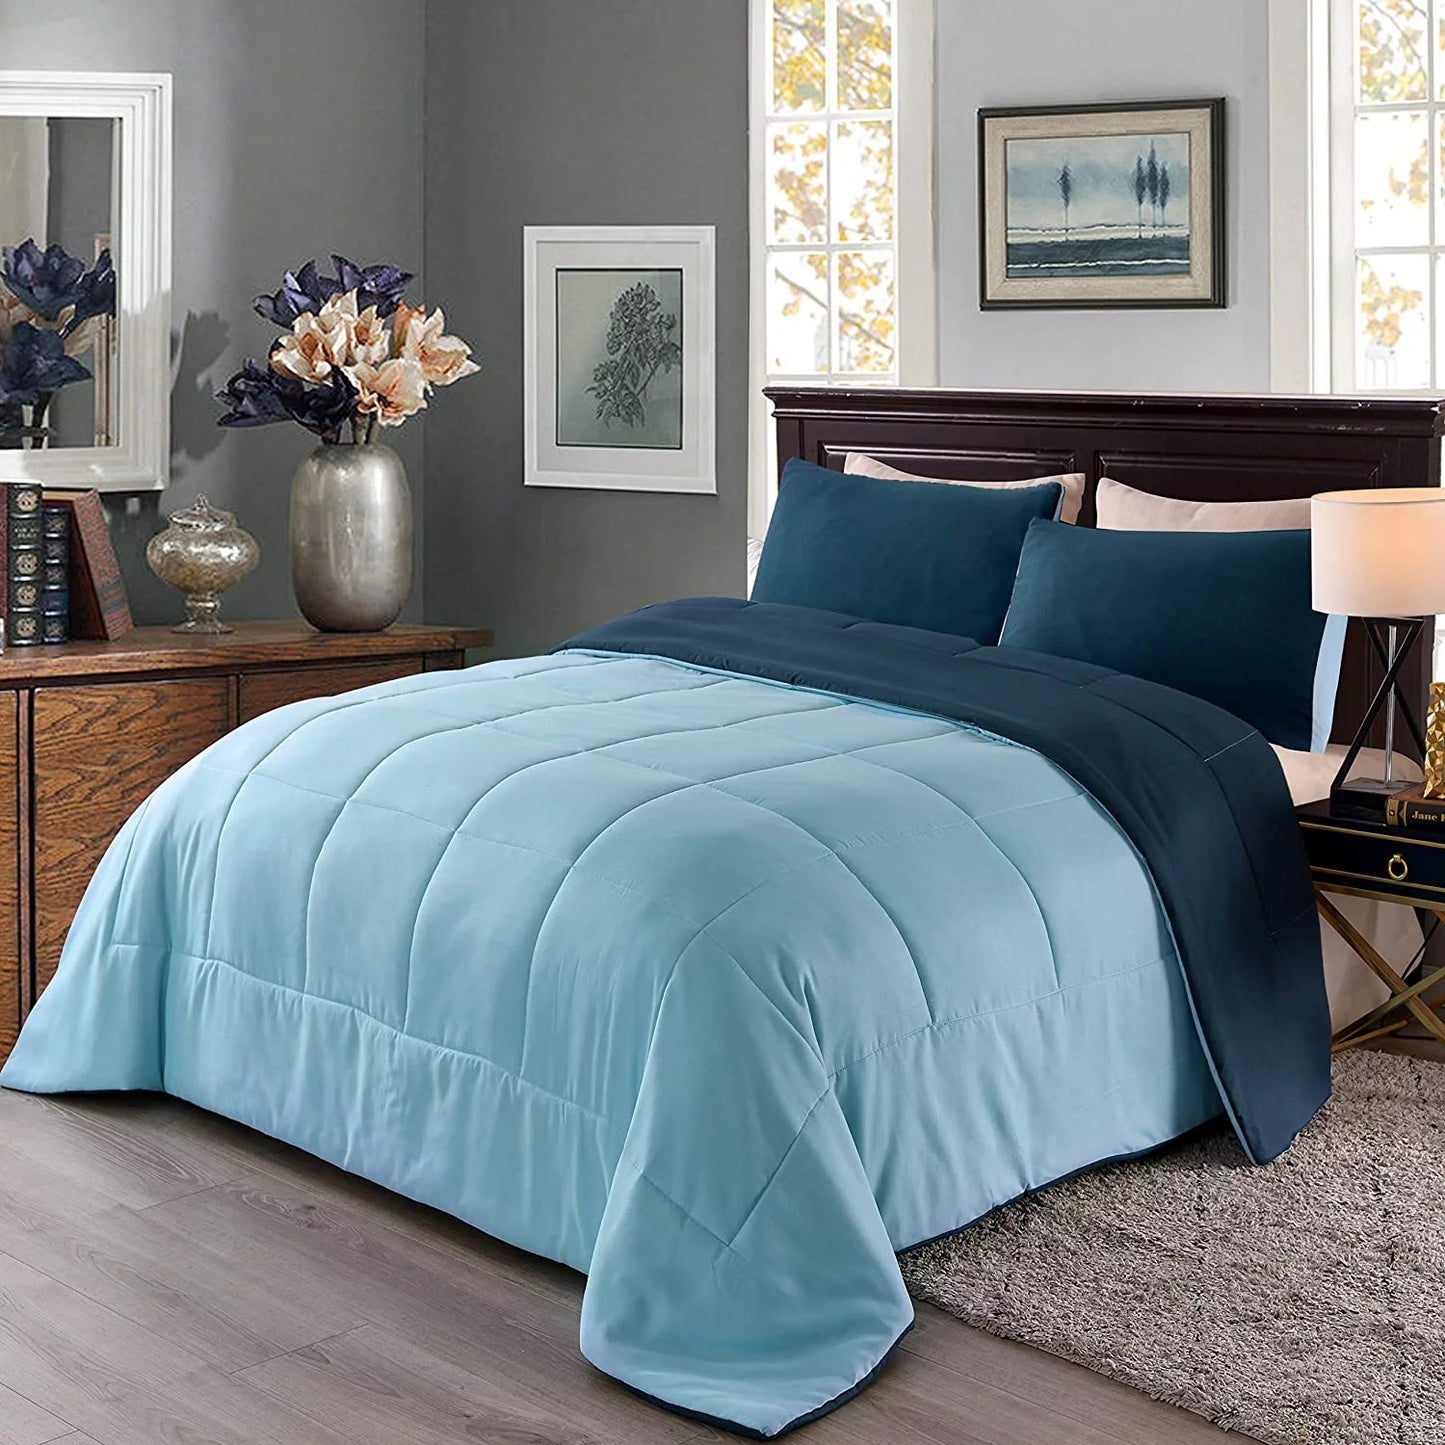 Exclusivo Mezcla Lightweight Reversible 3-Piece Comforter Set All Seasons, Down Alternative Comforter with 2 Pillow Shams, King Size, Navy/ Blue